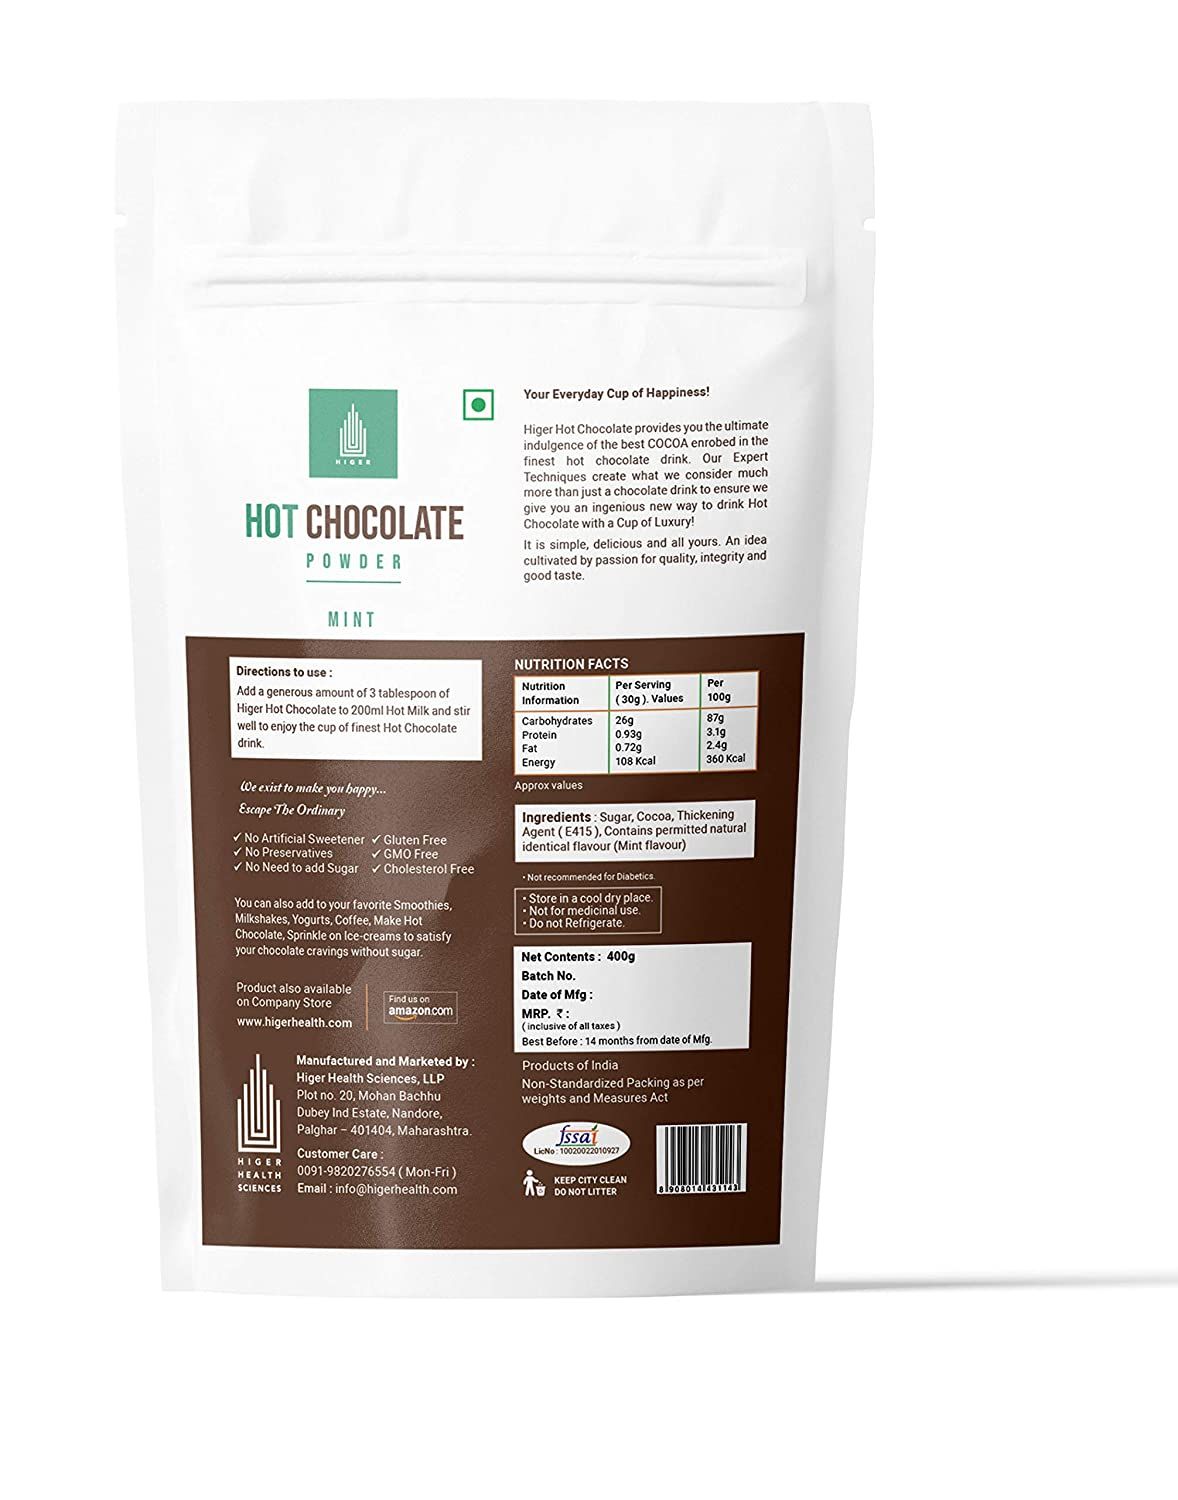 Higer Hot Chocolate Mint Powder Image